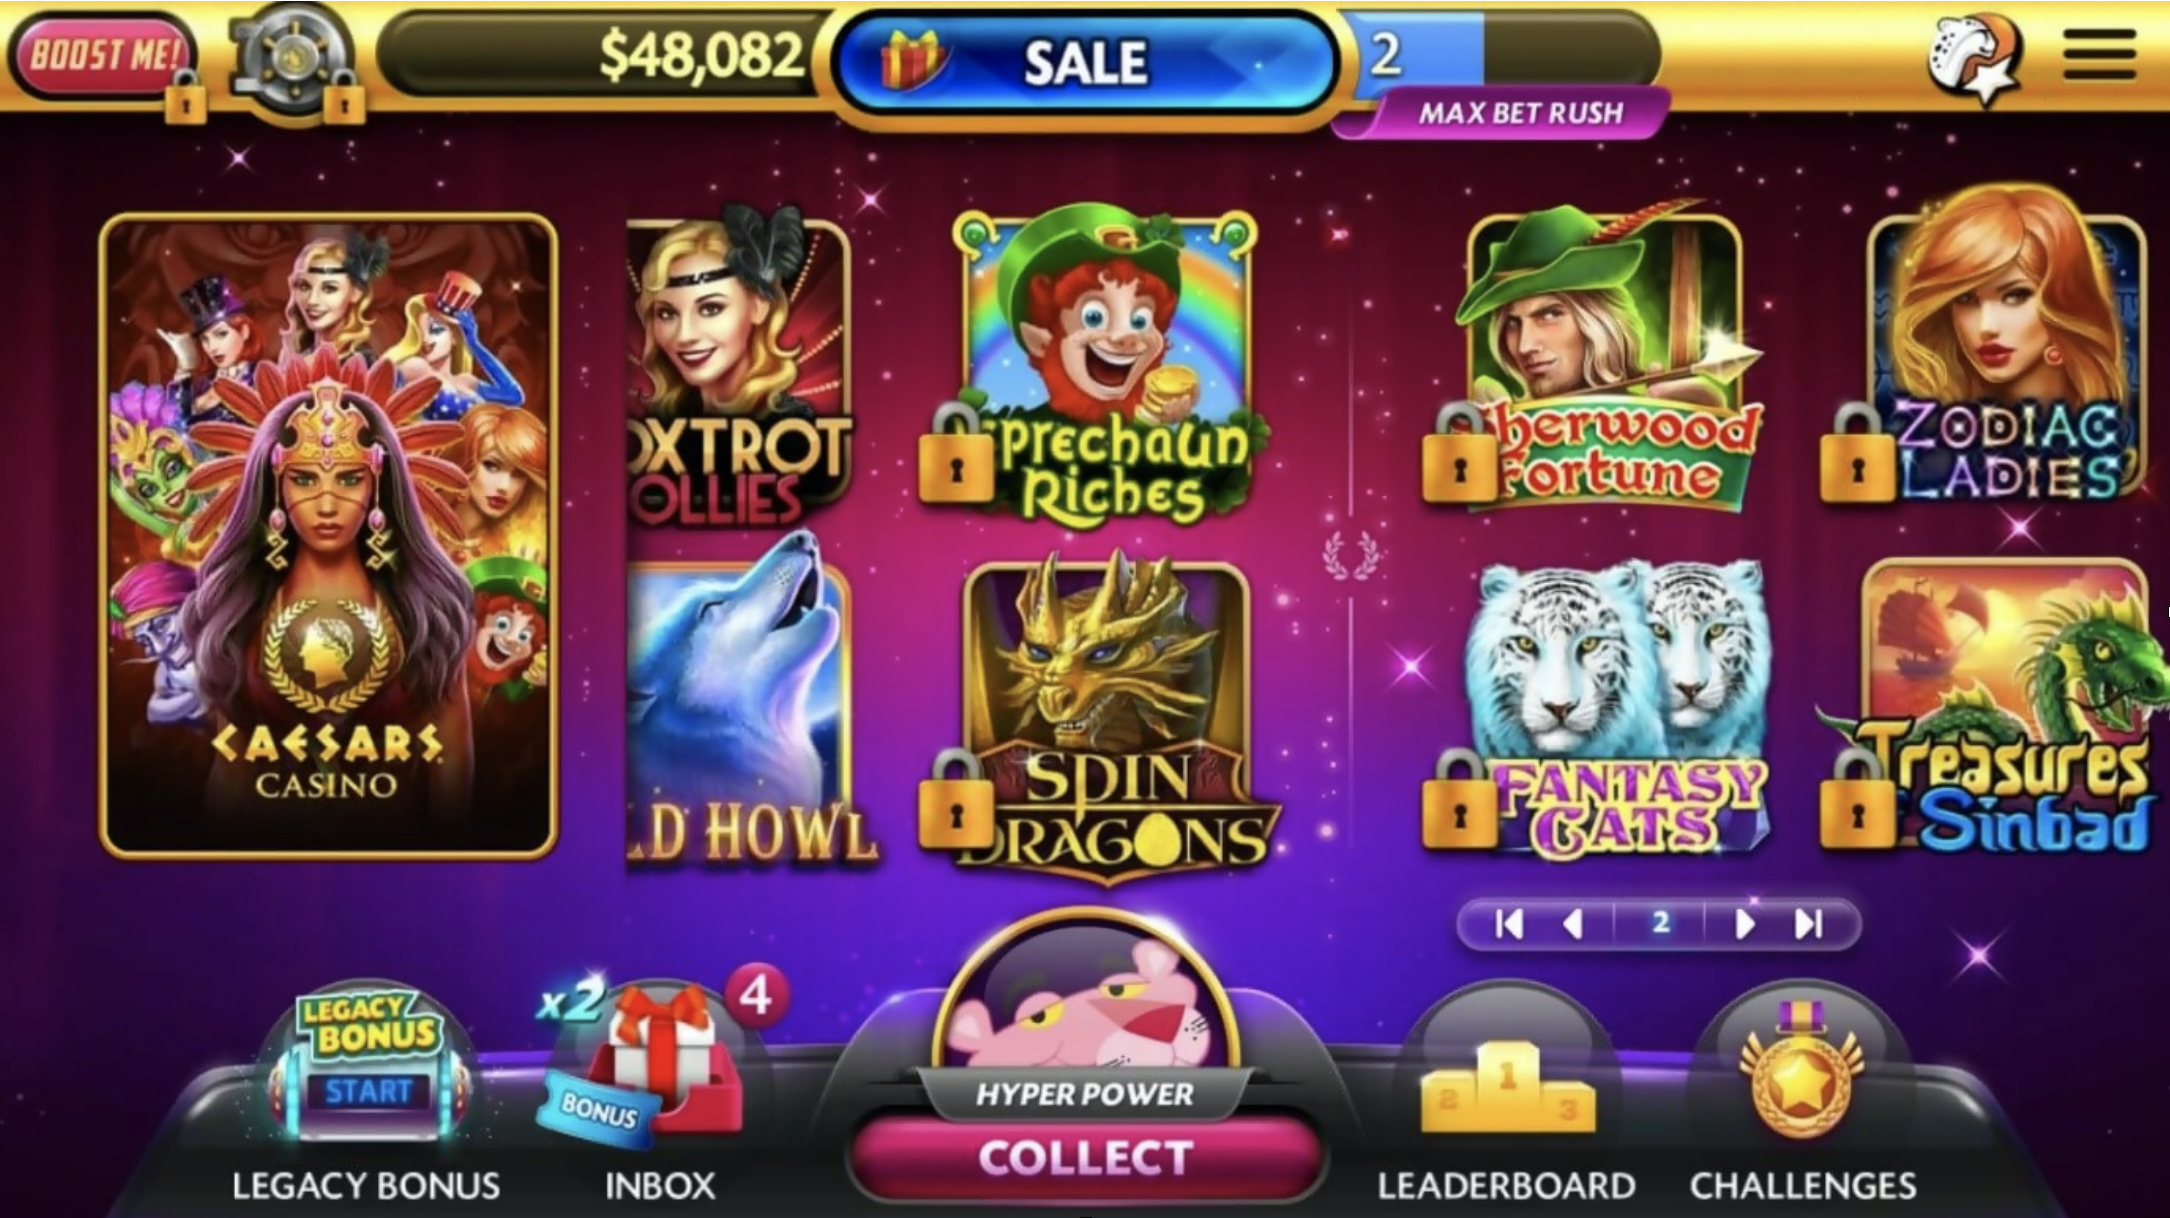 Caesars Online Casino Customer Service